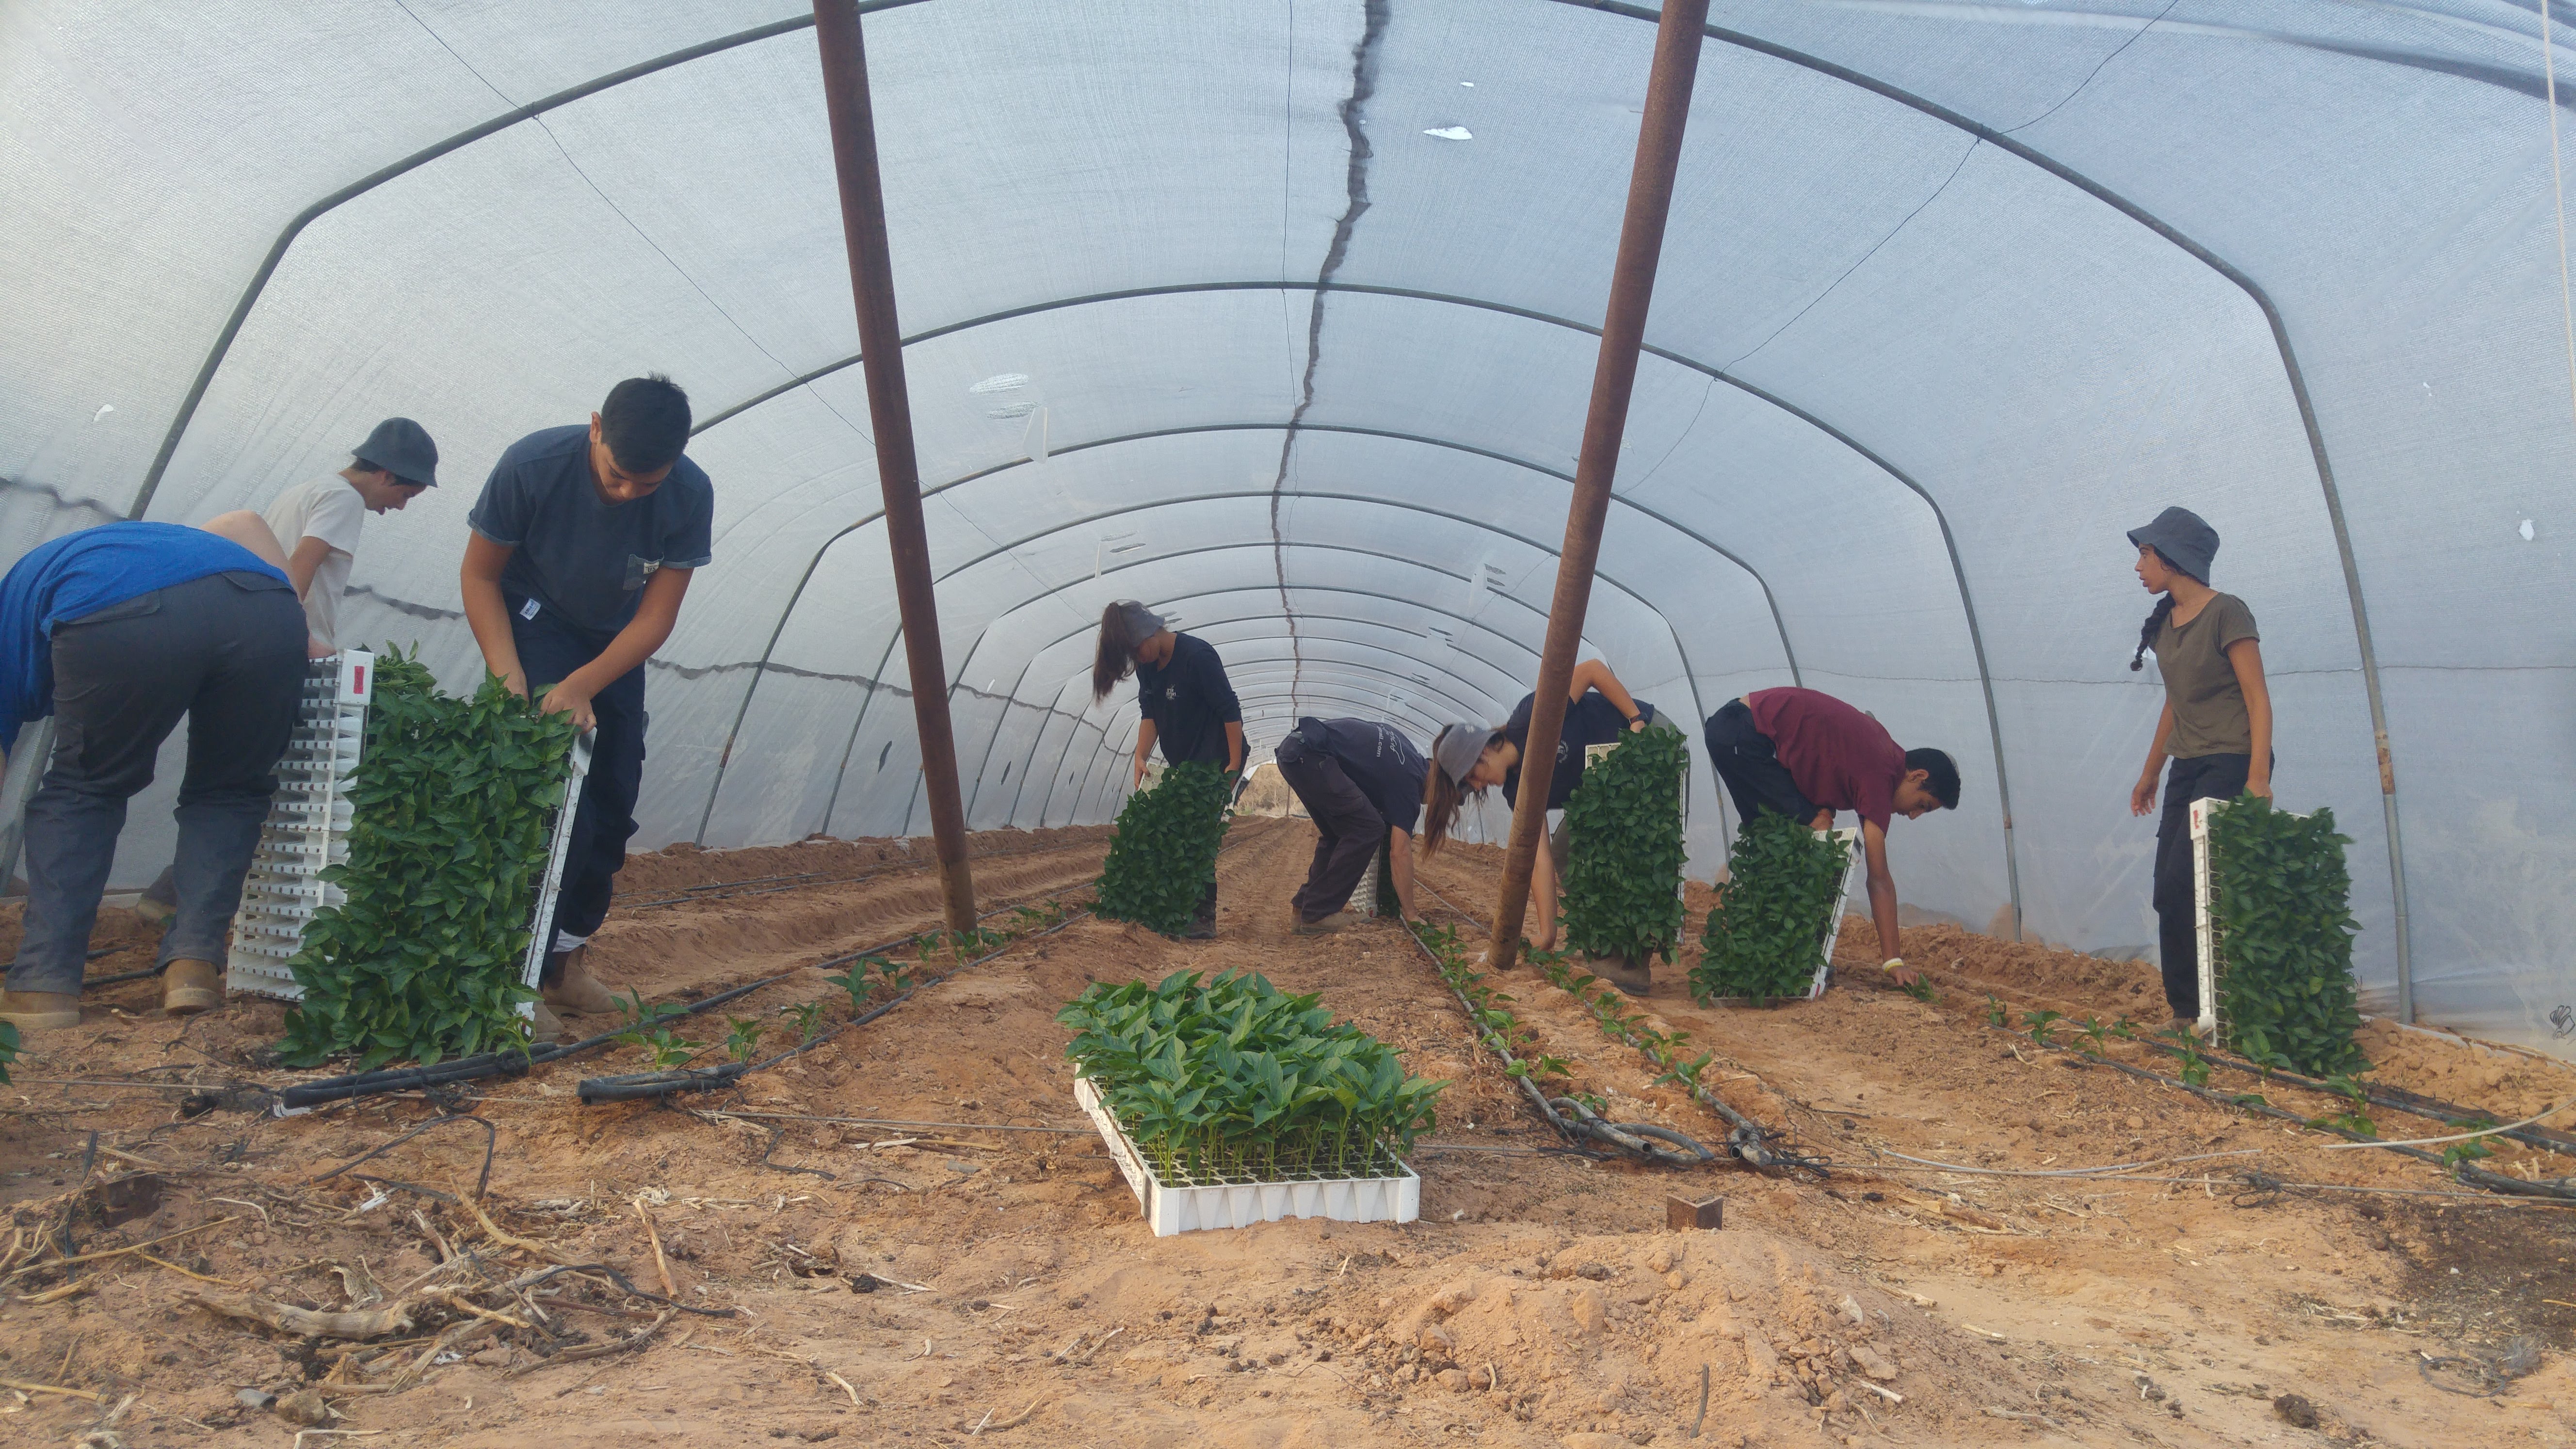 Israeli School Uses Legacy of Farming Pioneers to Instill Values